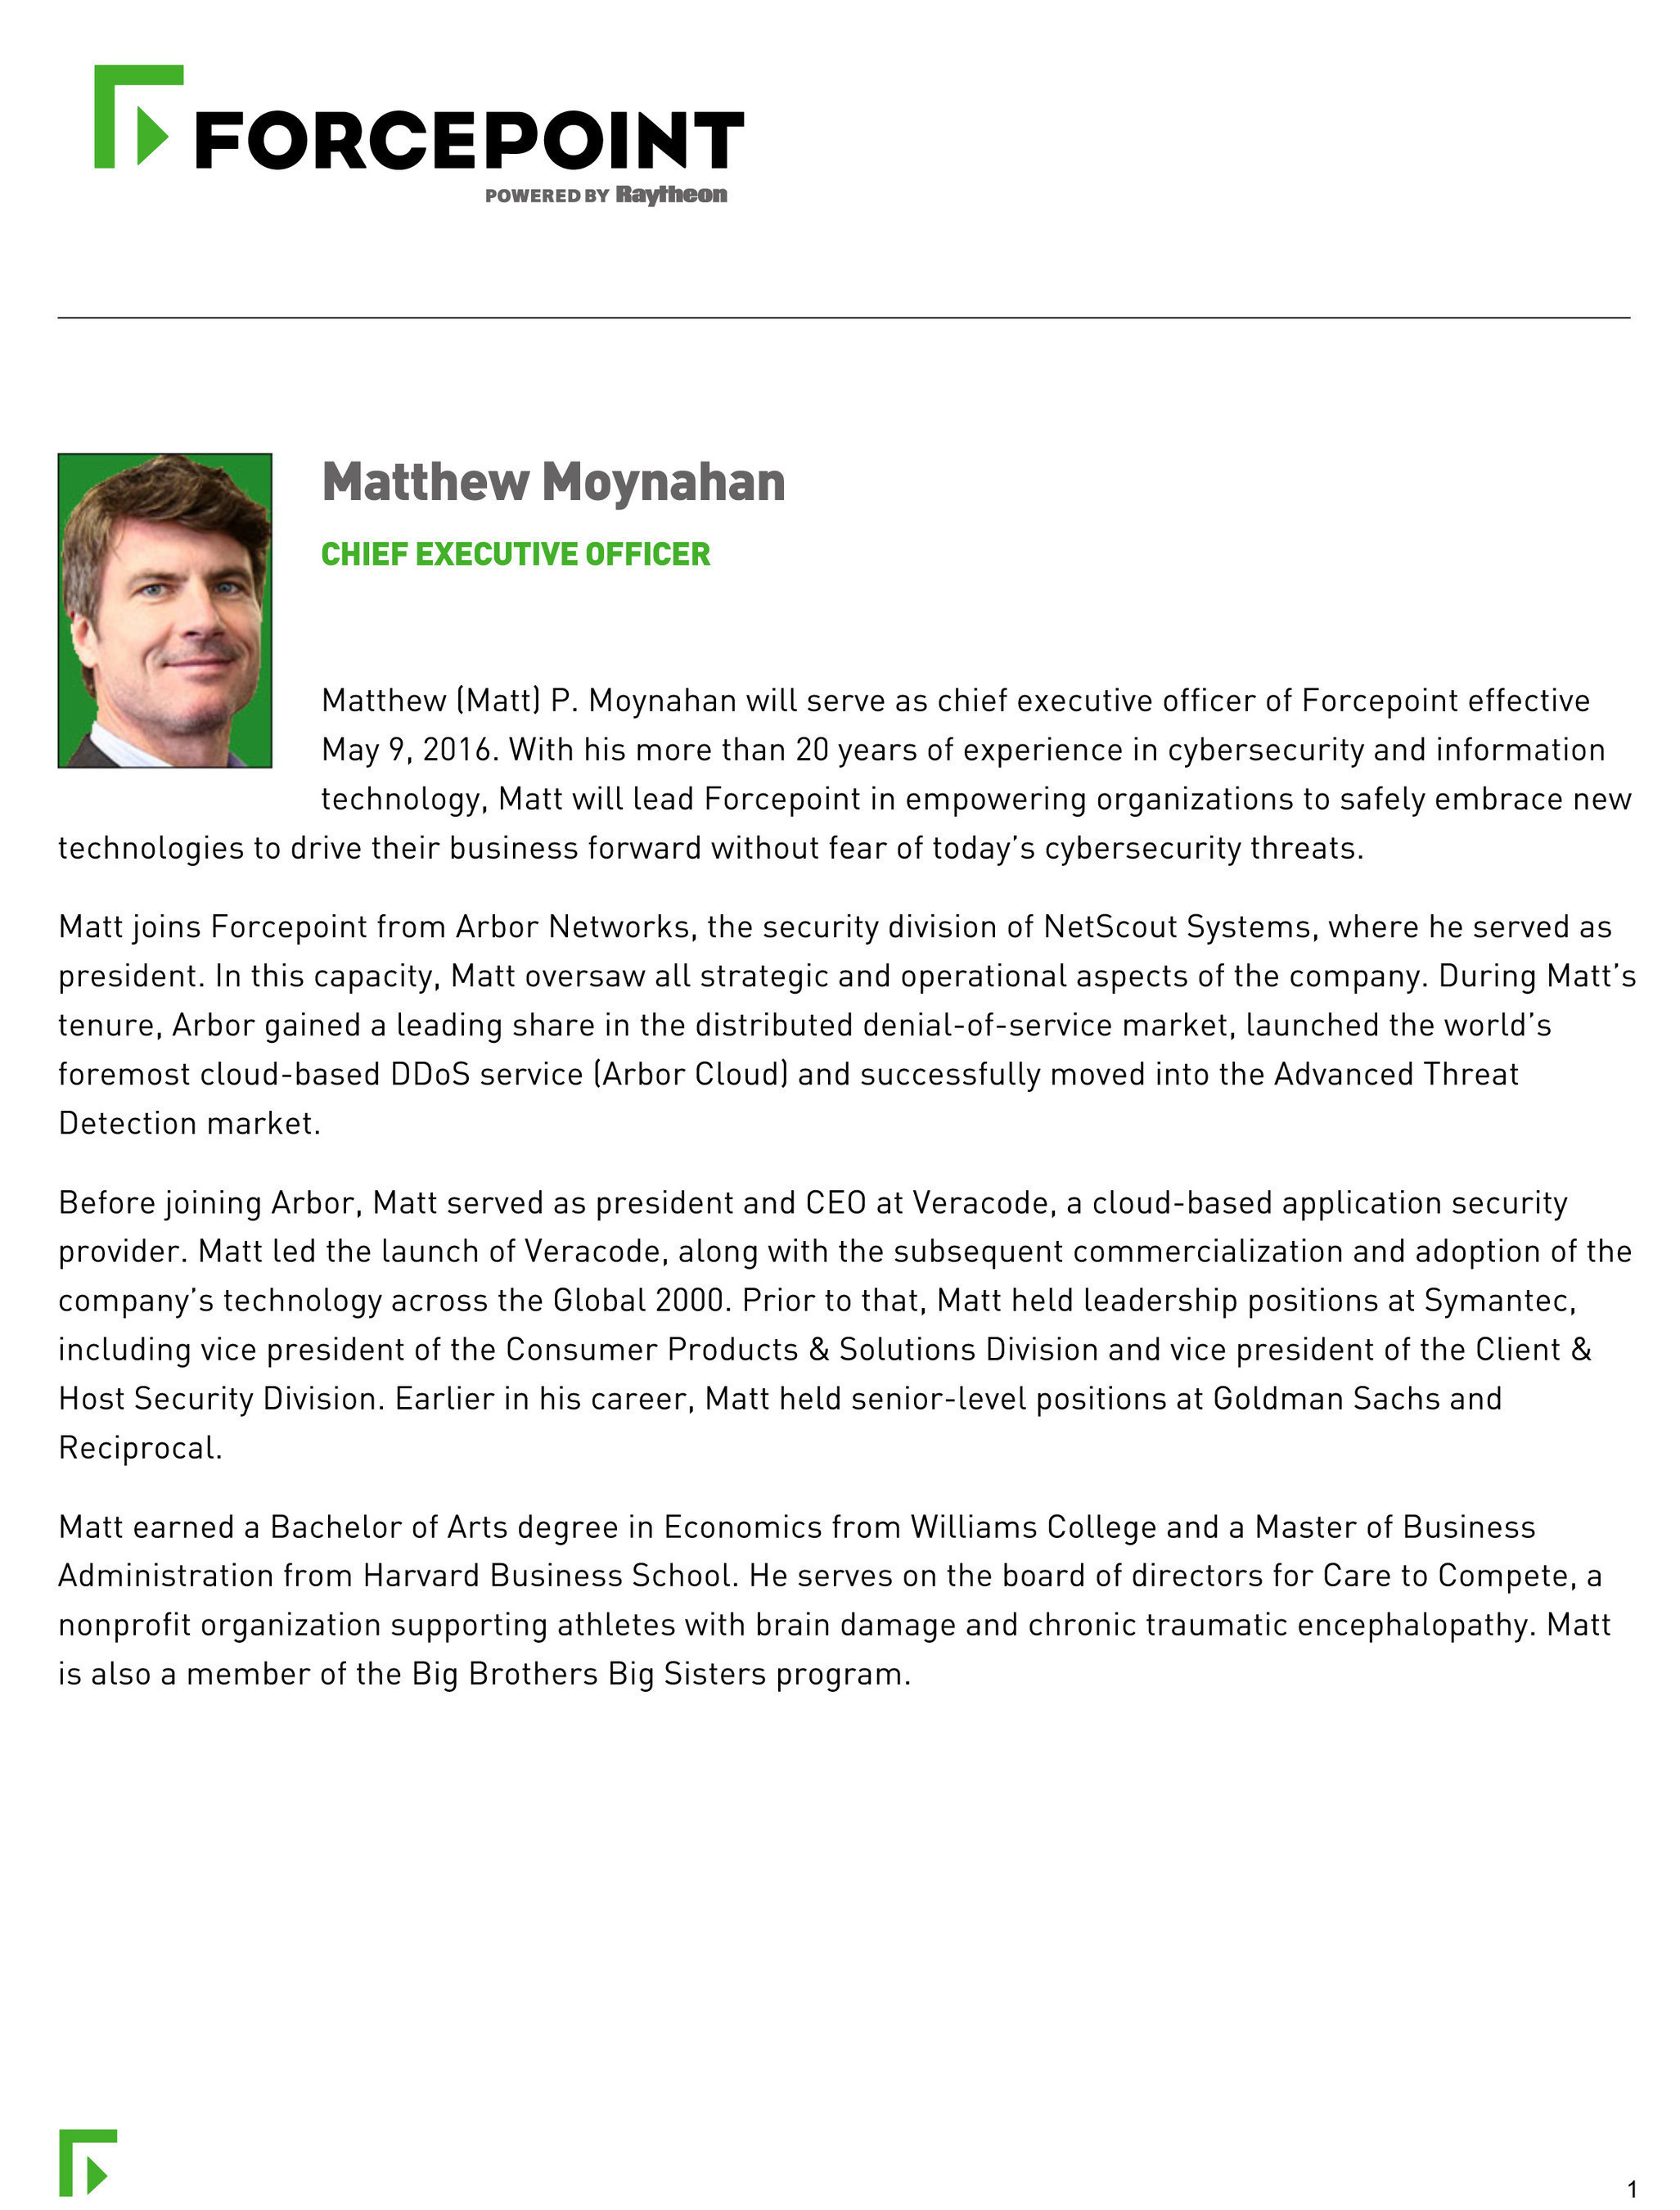 Forcepoint CEO Matthew P. Moynahan Bio